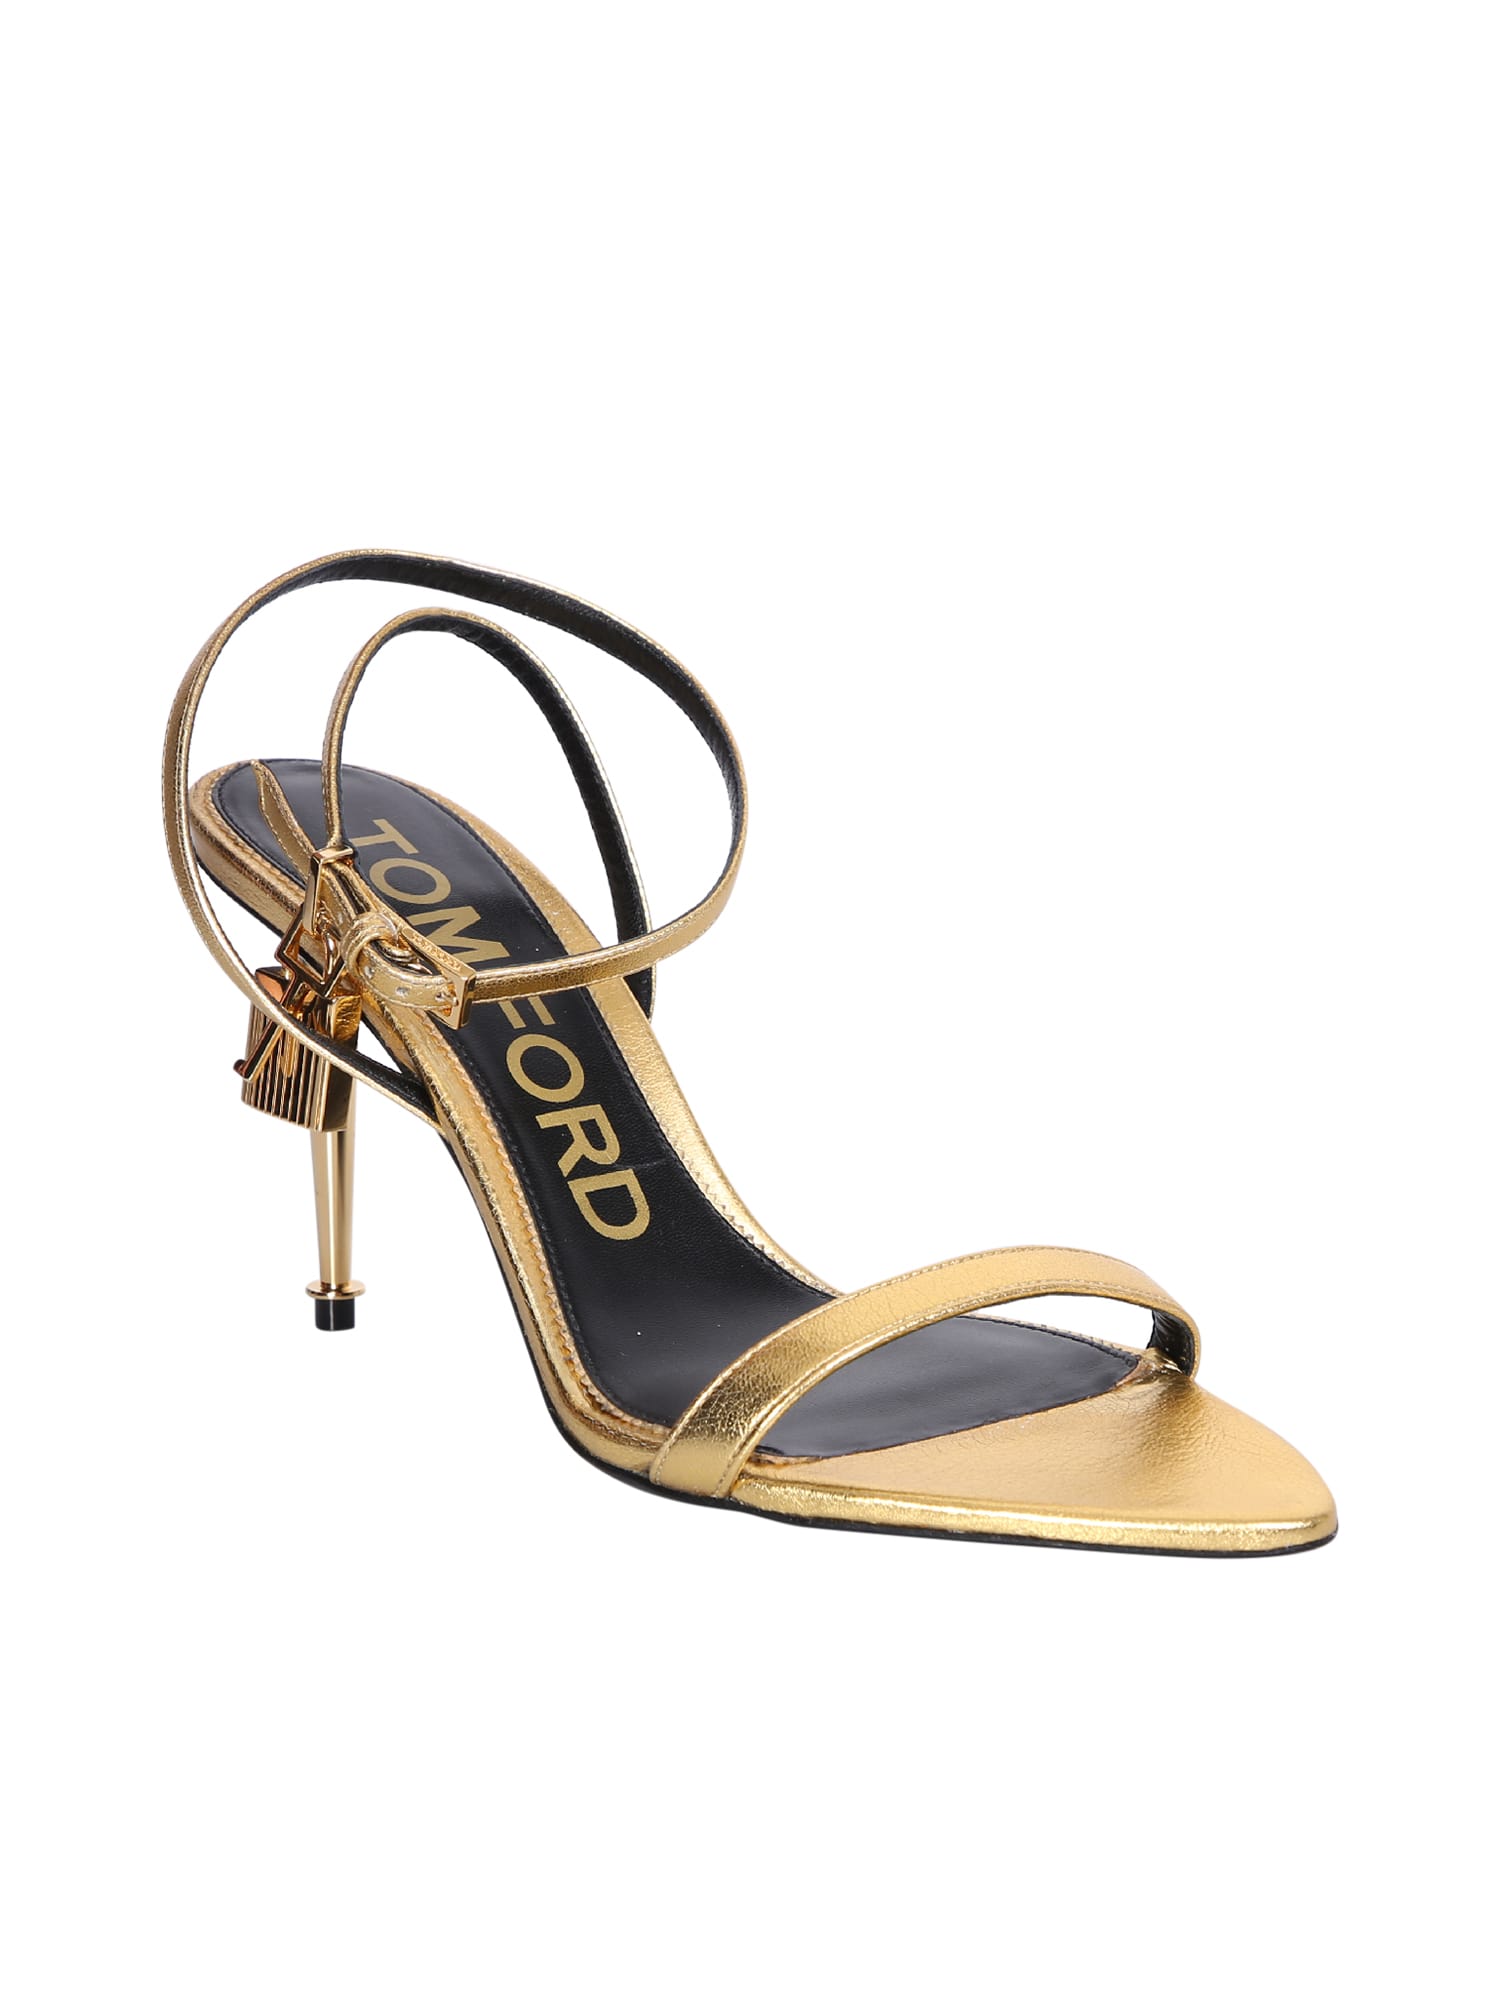 Tom Ford Gold Padlock Sandals | italist